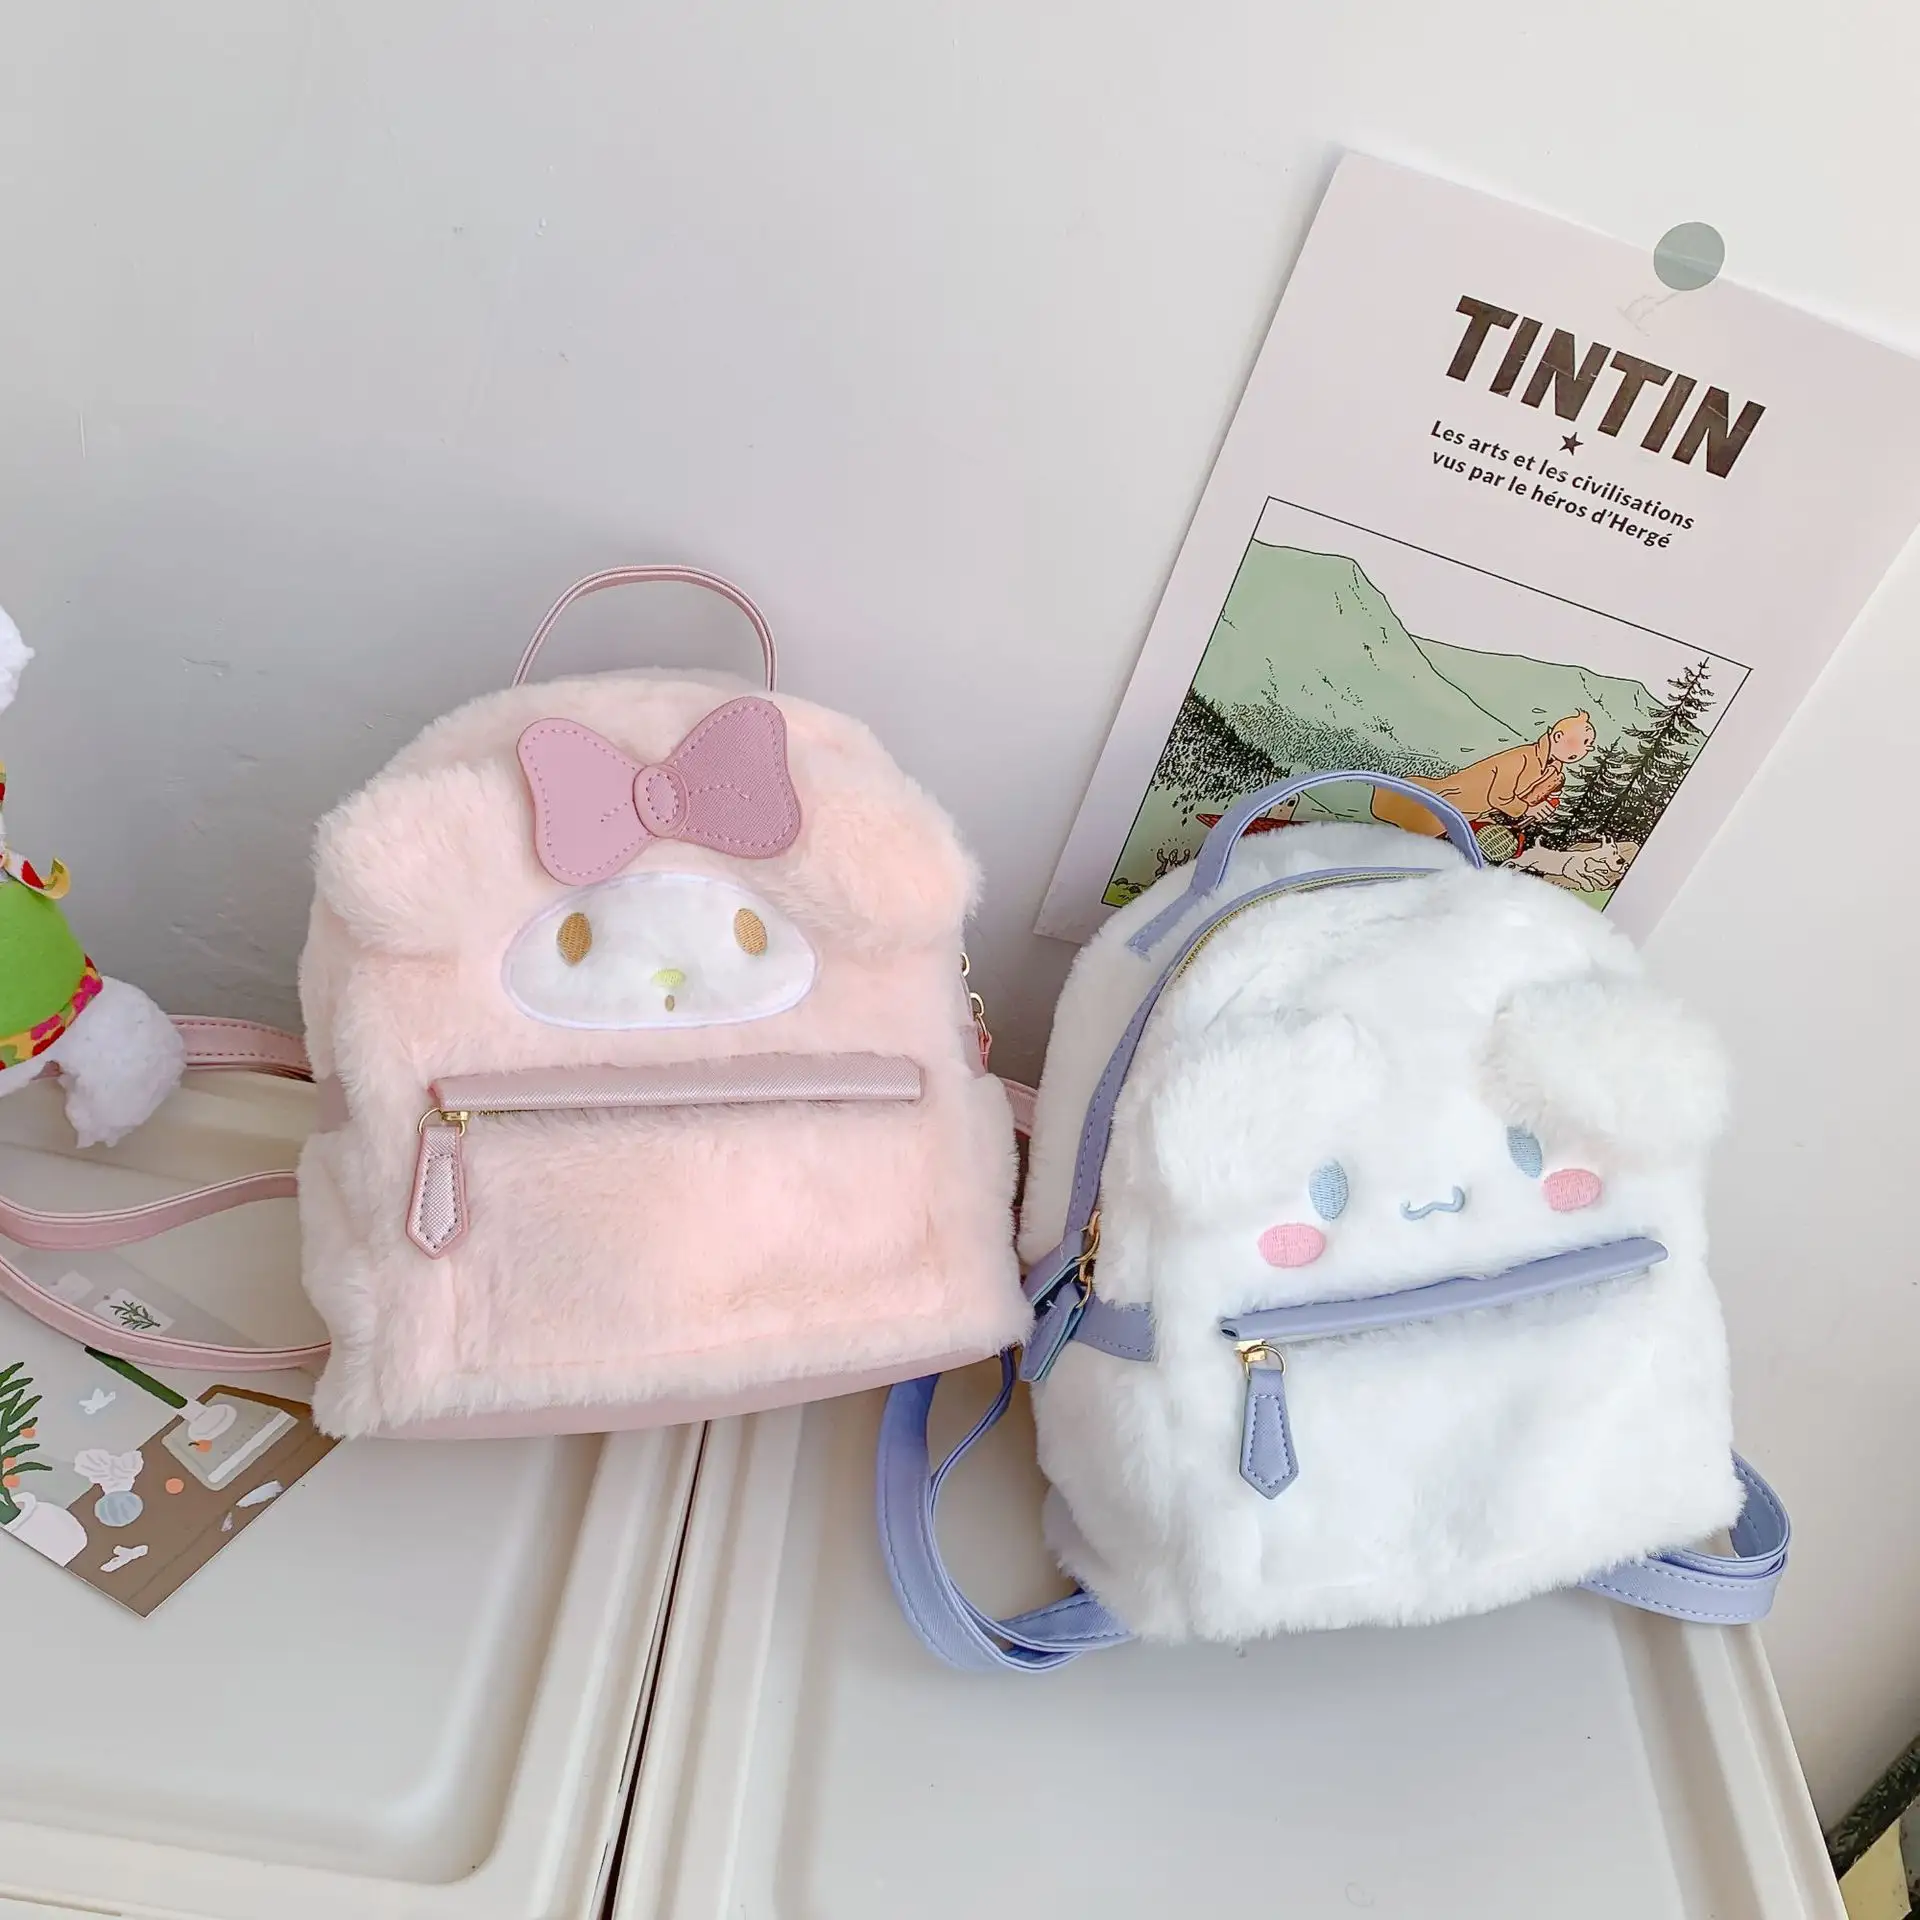 Cinnamon Roll Sanrio Backpack Cute My Melody Bag Soft Girl Stuffed Animals Loungefly Sanrio Backpacks